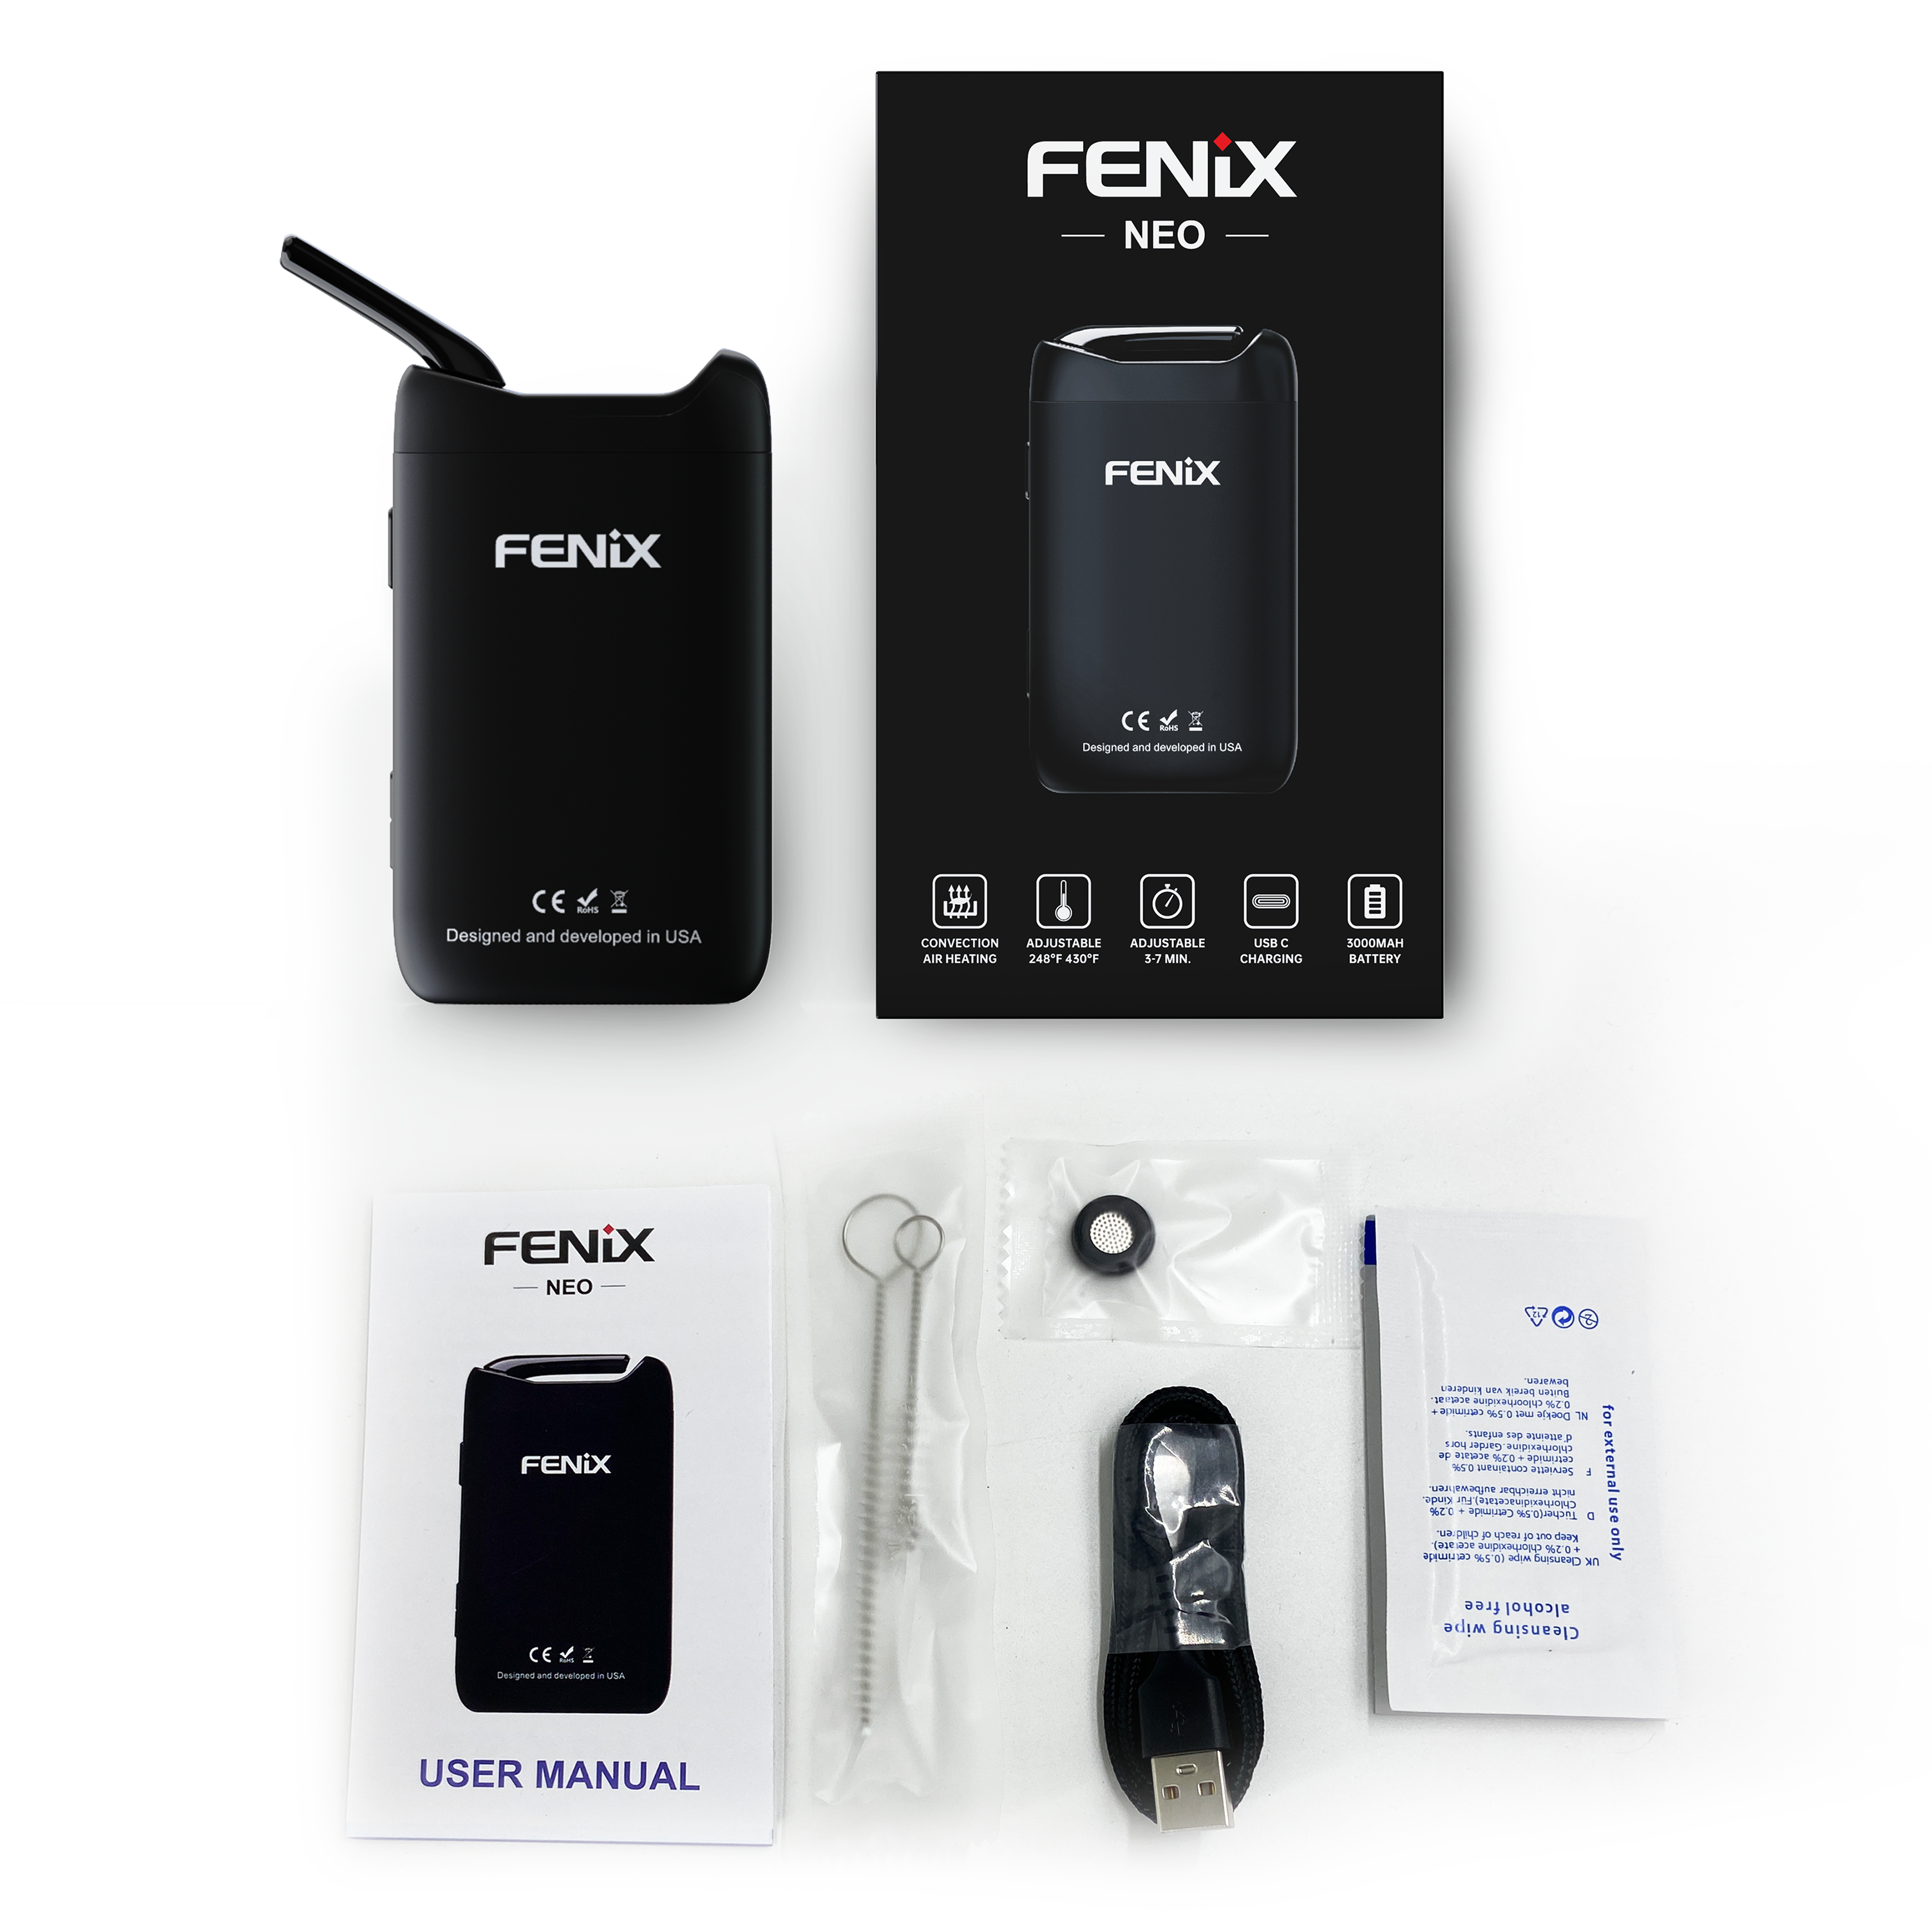 Fenix Neo Portable Vaporizer